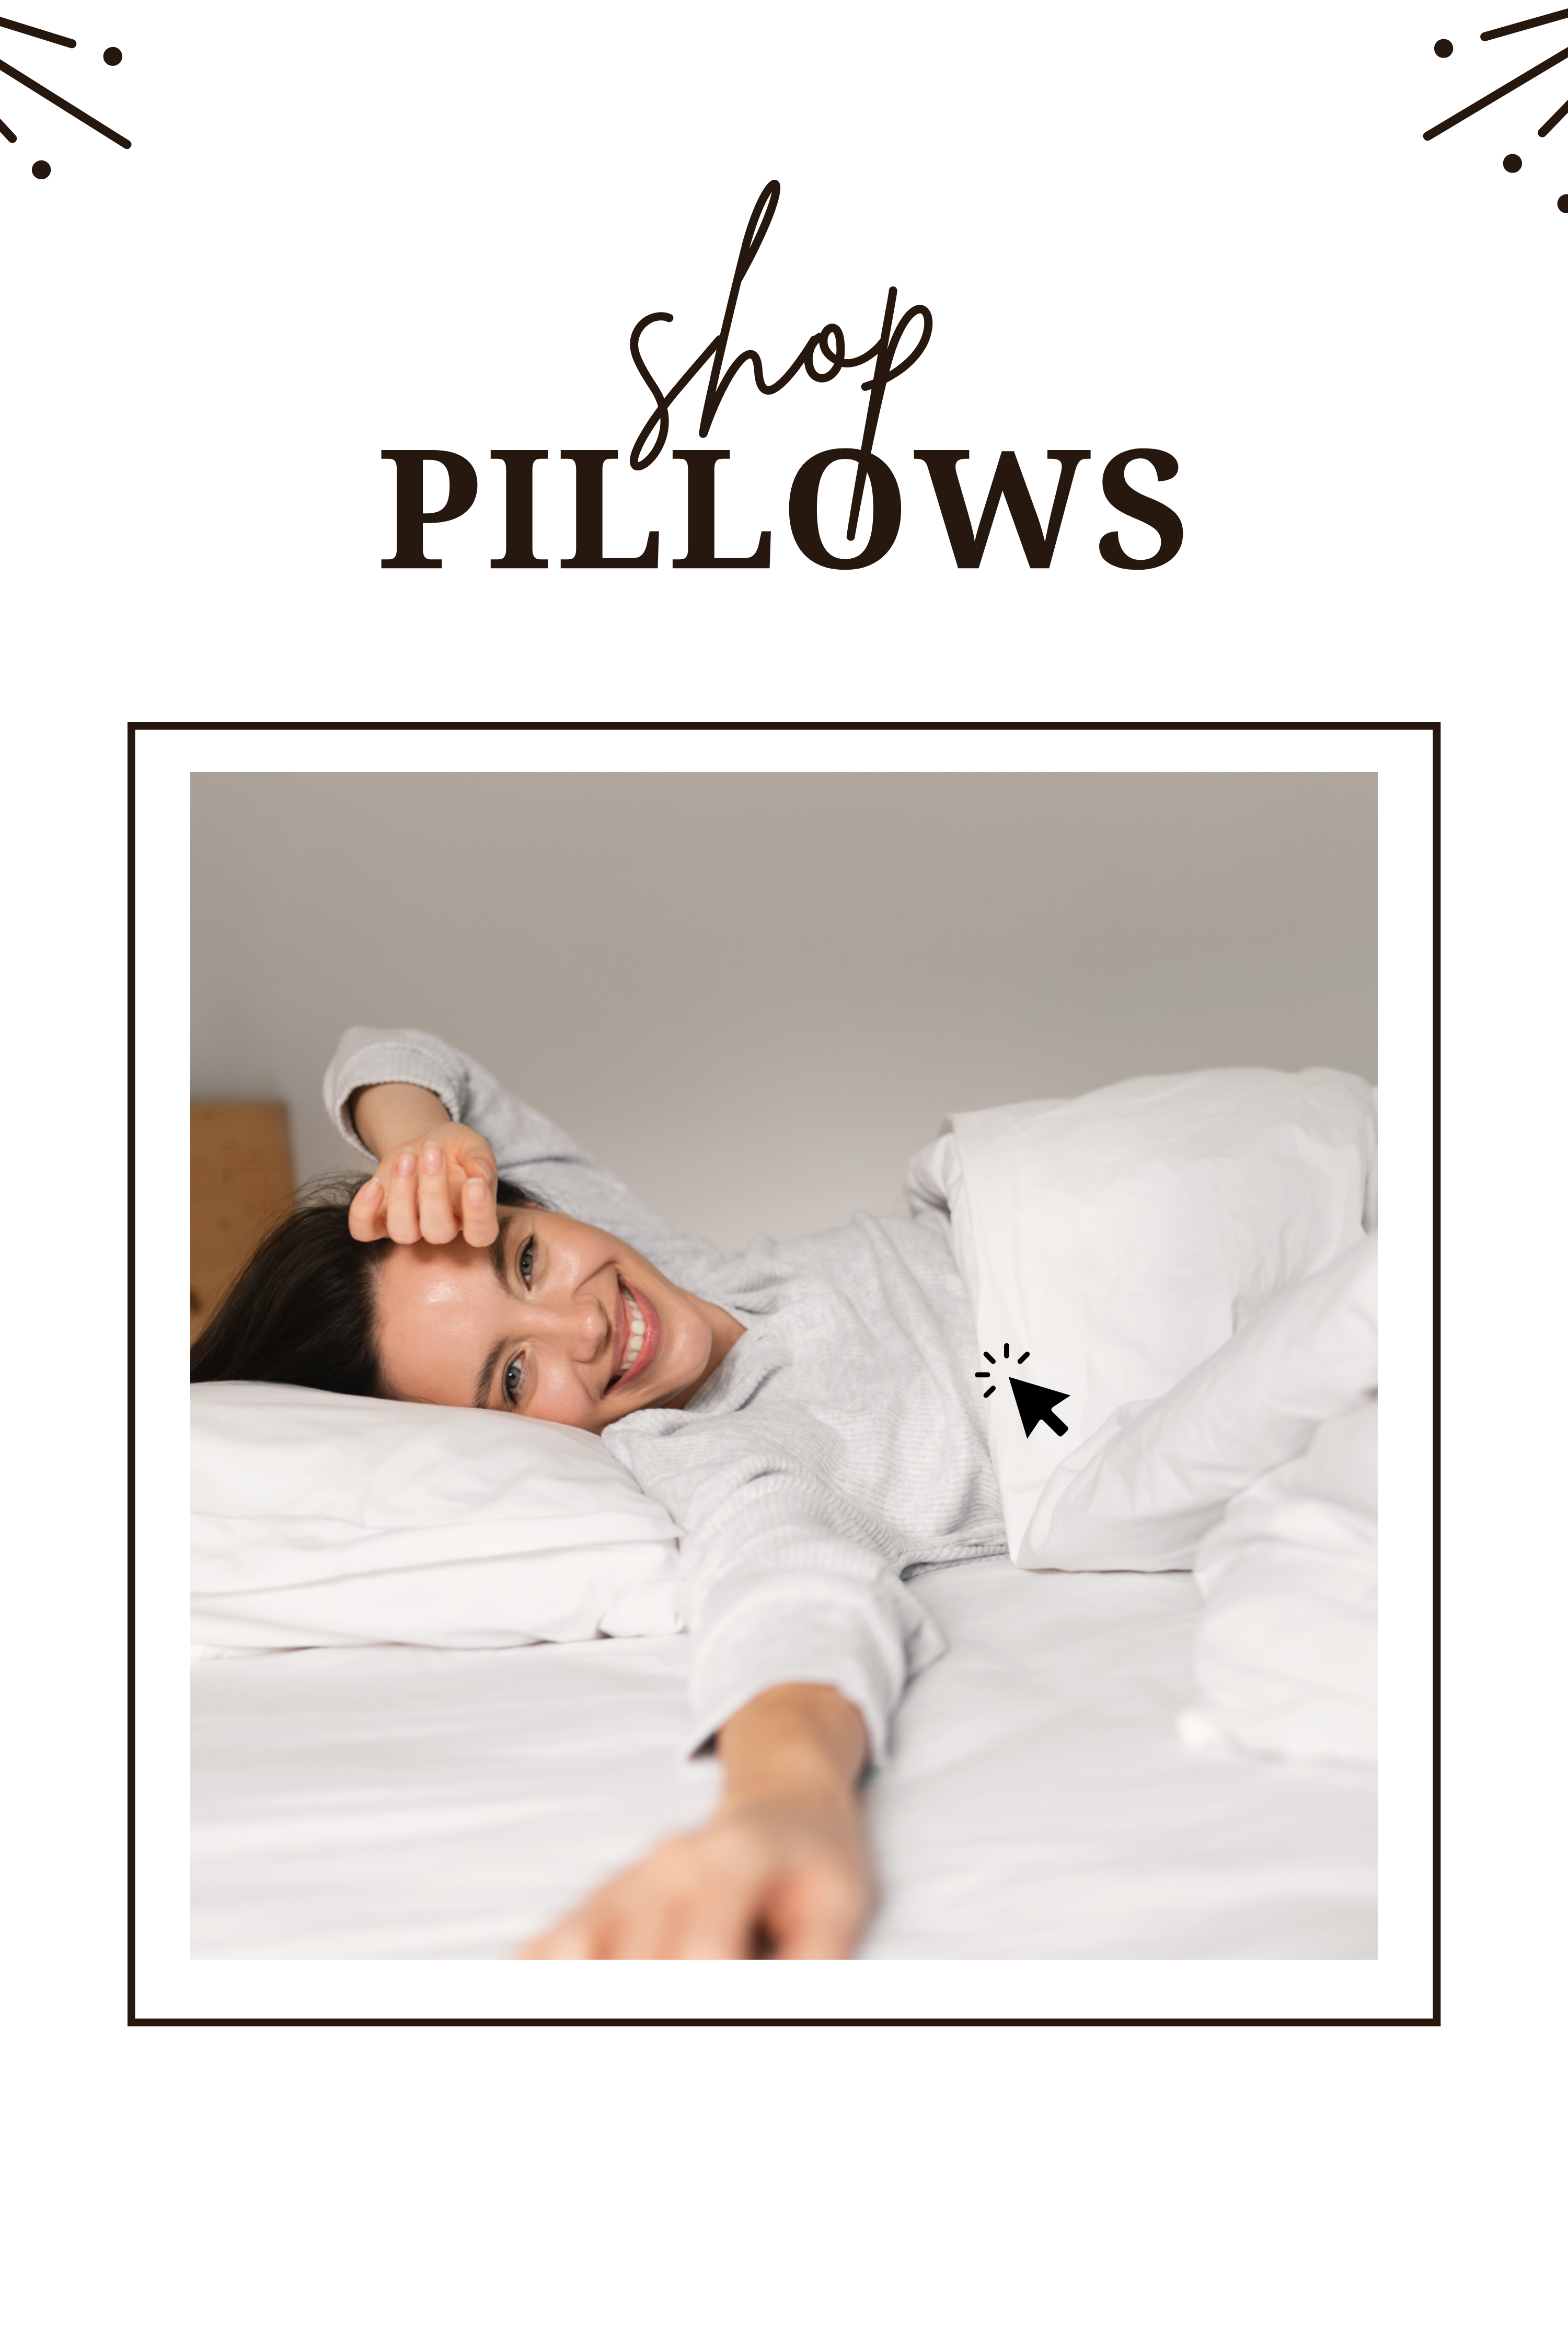 Shop pillows on pillows.com